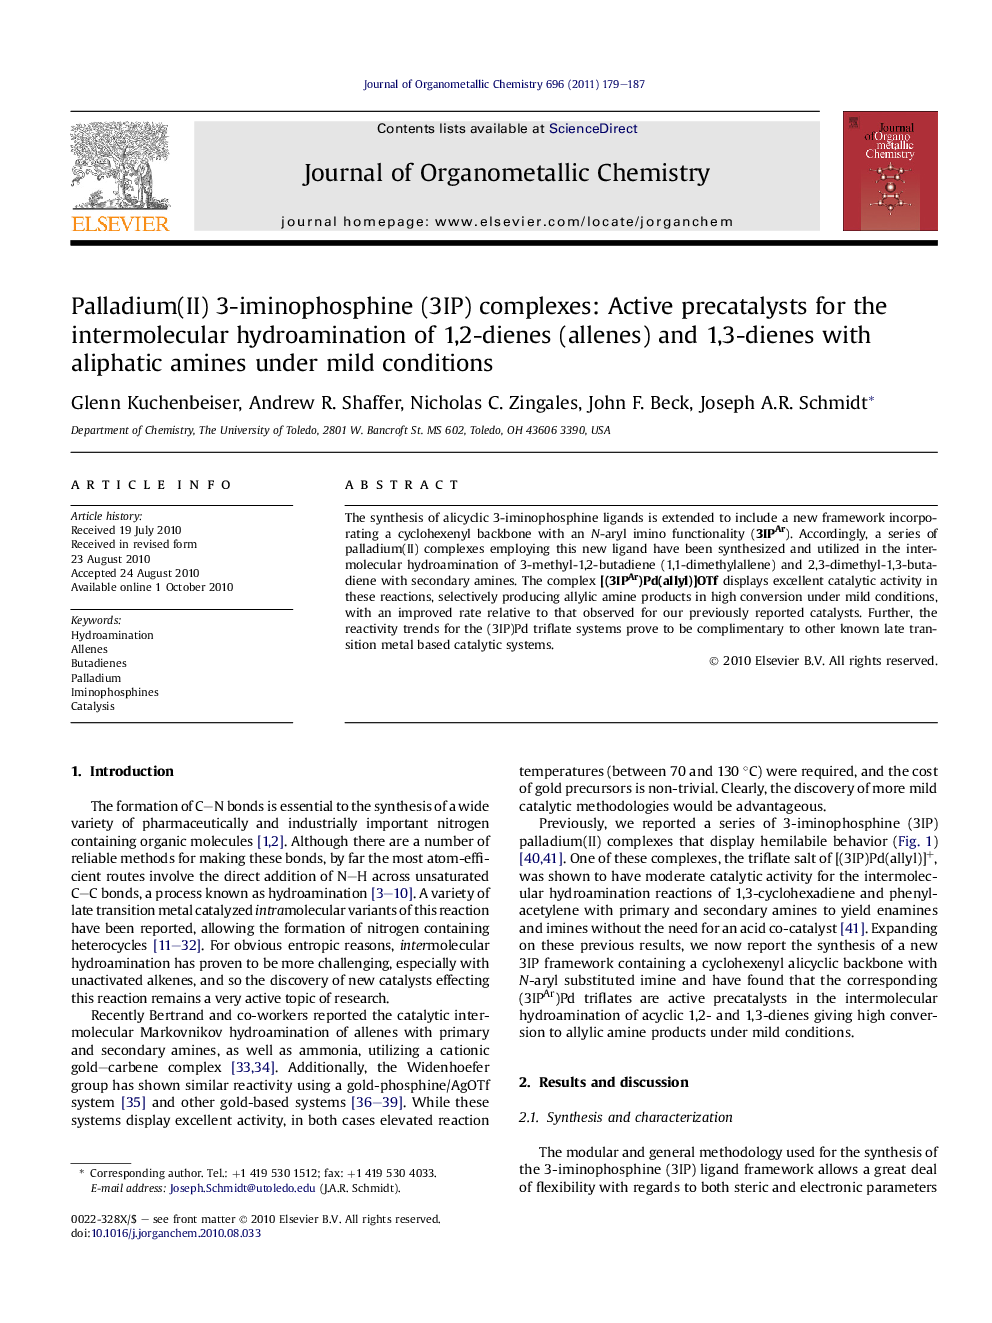 Palladium(II) 3-iminophosphine (3IP) complexes: Active precatalysts for the intermolecular hydroamination of 1,2-dienes (allenes) and 1,3-dienes with aliphatic amines under mild conditions